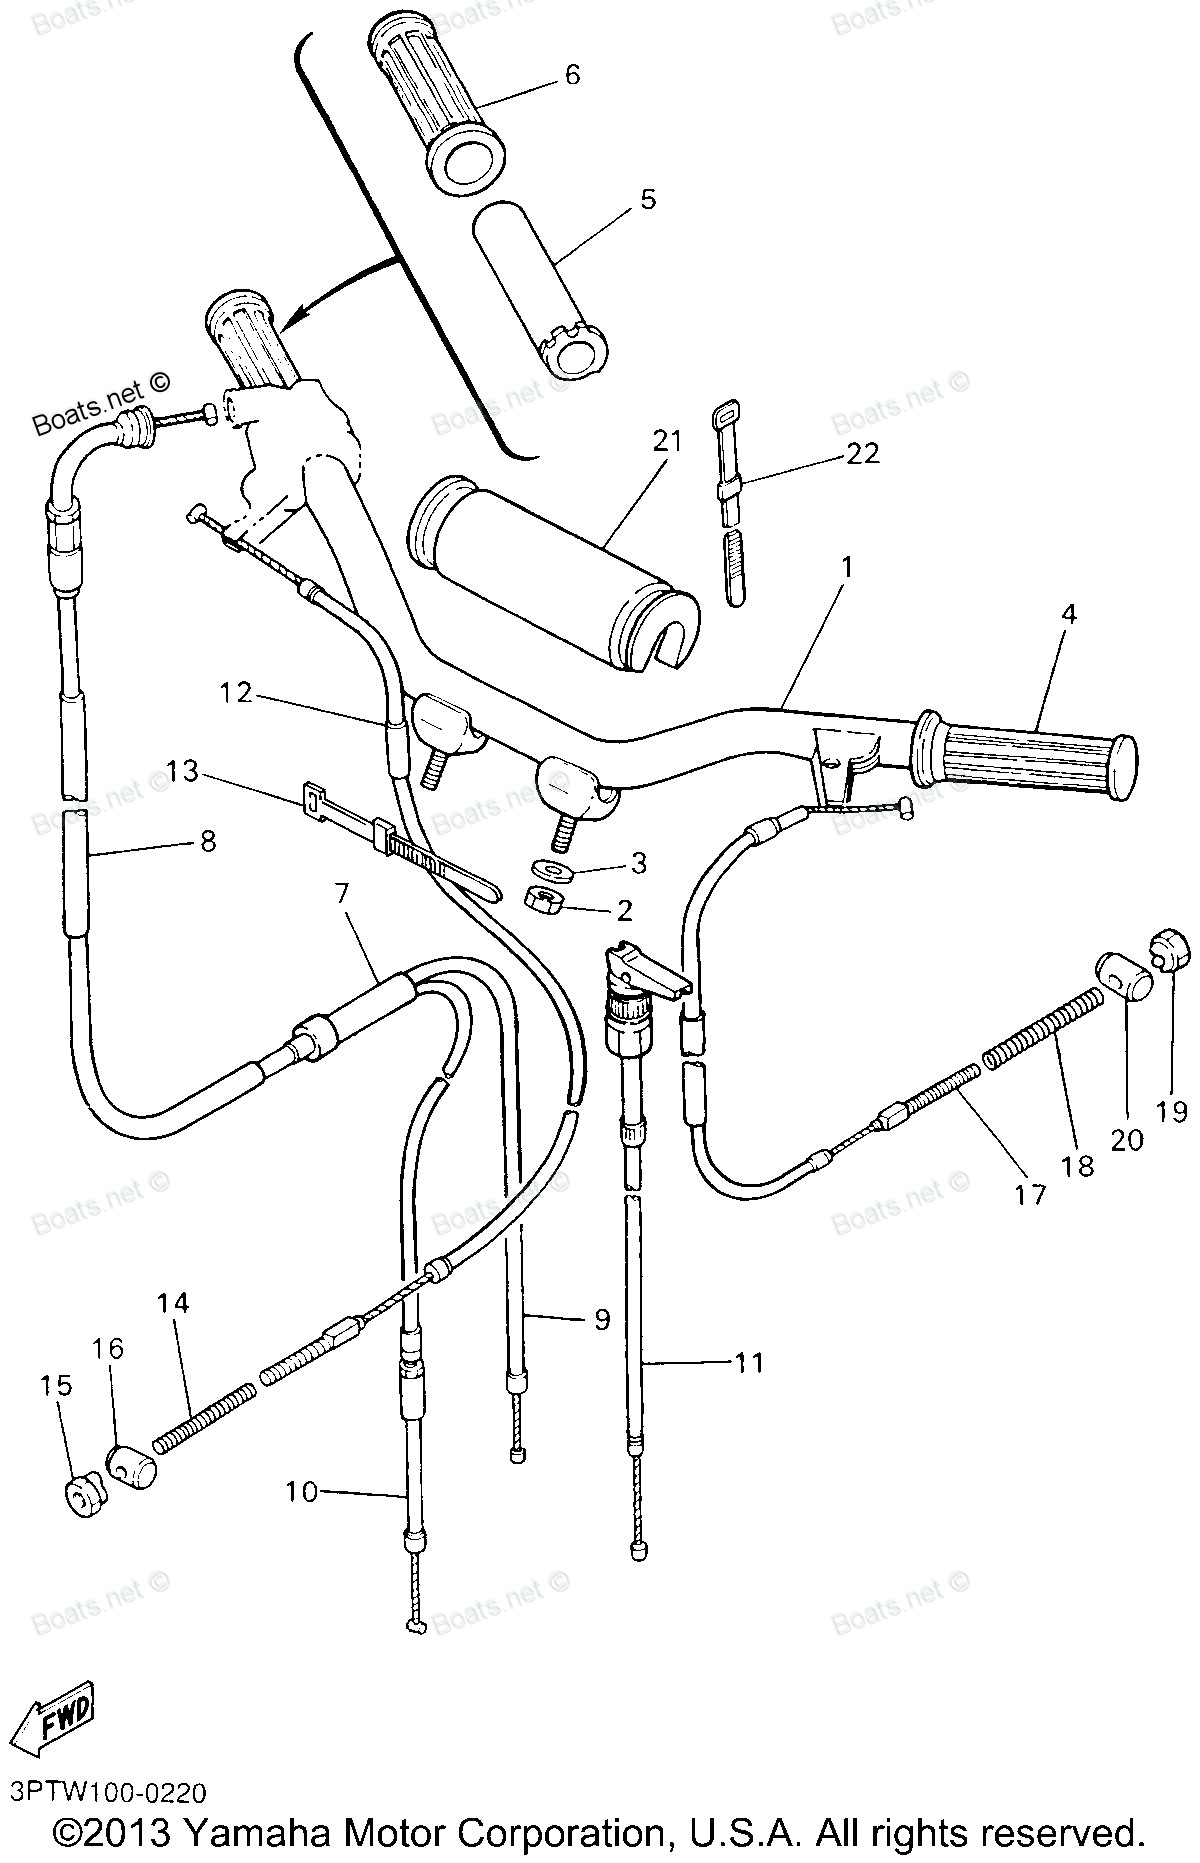 Honda foreman 400 Parts Diagram Honda Trx300 Fourtrax S Usa Carburetor Bighu0324e1800a 781d Can Am Of Honda foreman 400 Parts Diagram